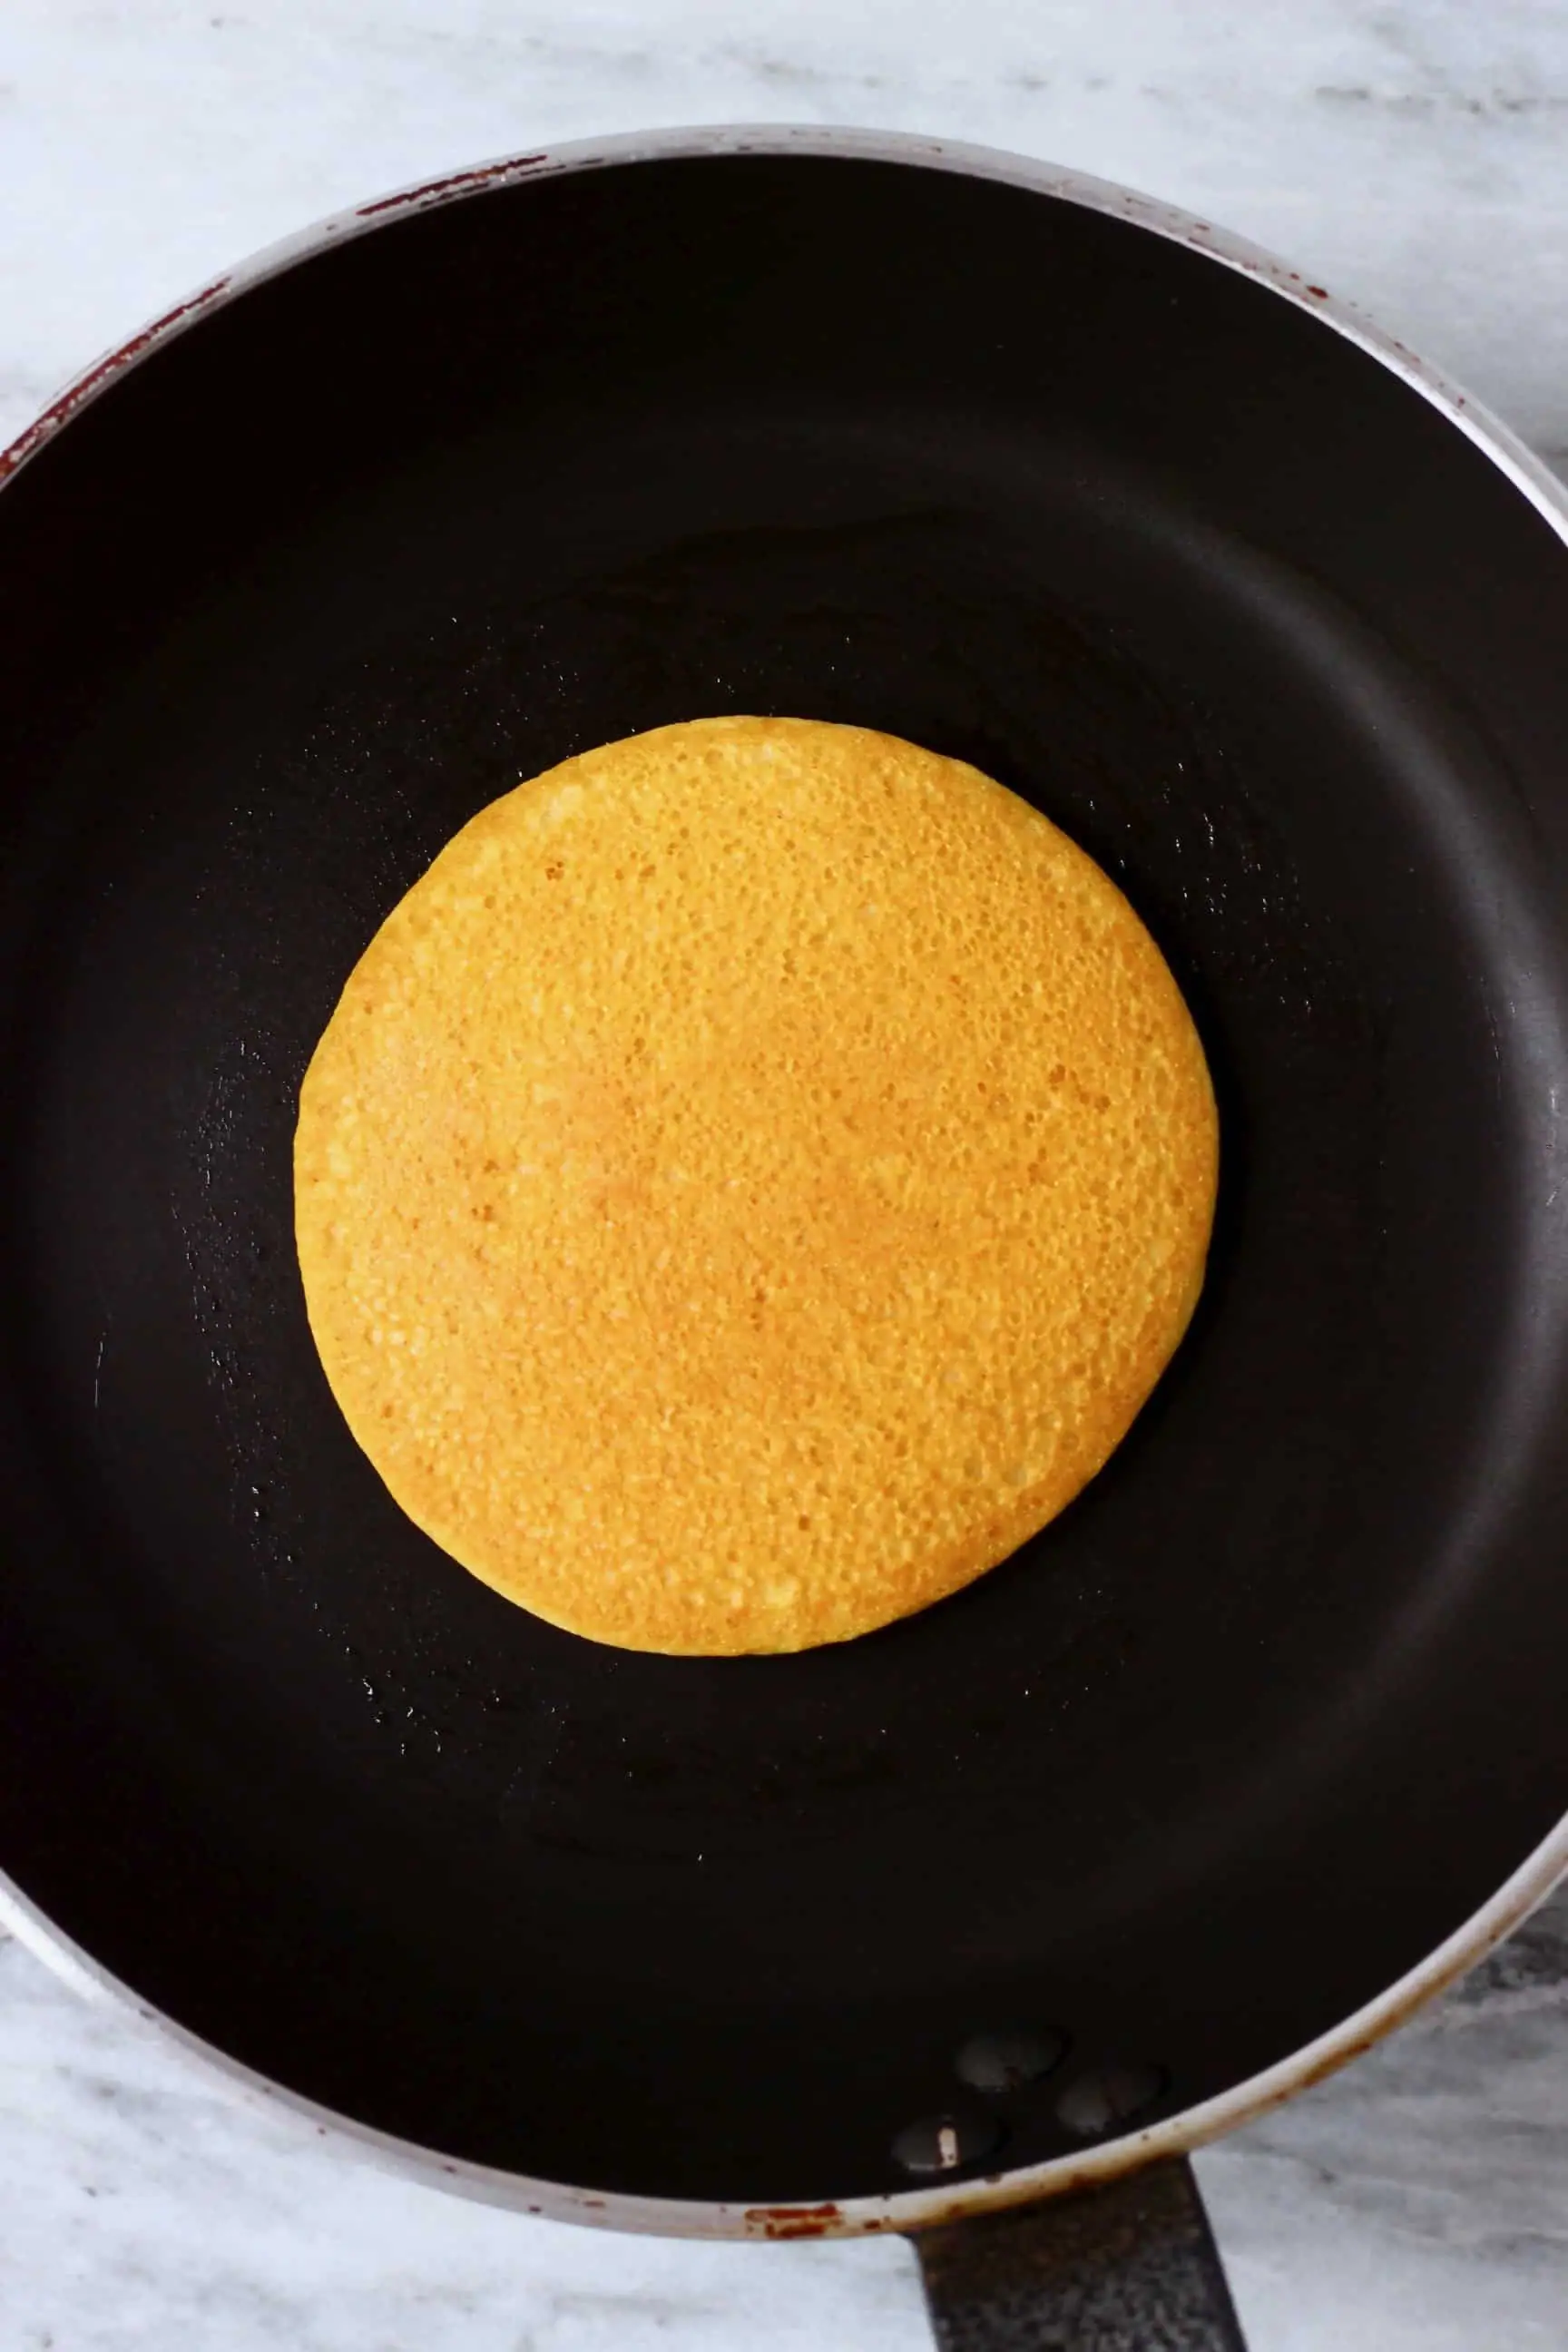 A golden brown gluten-free vegan cornmeal pancake in a frying pan